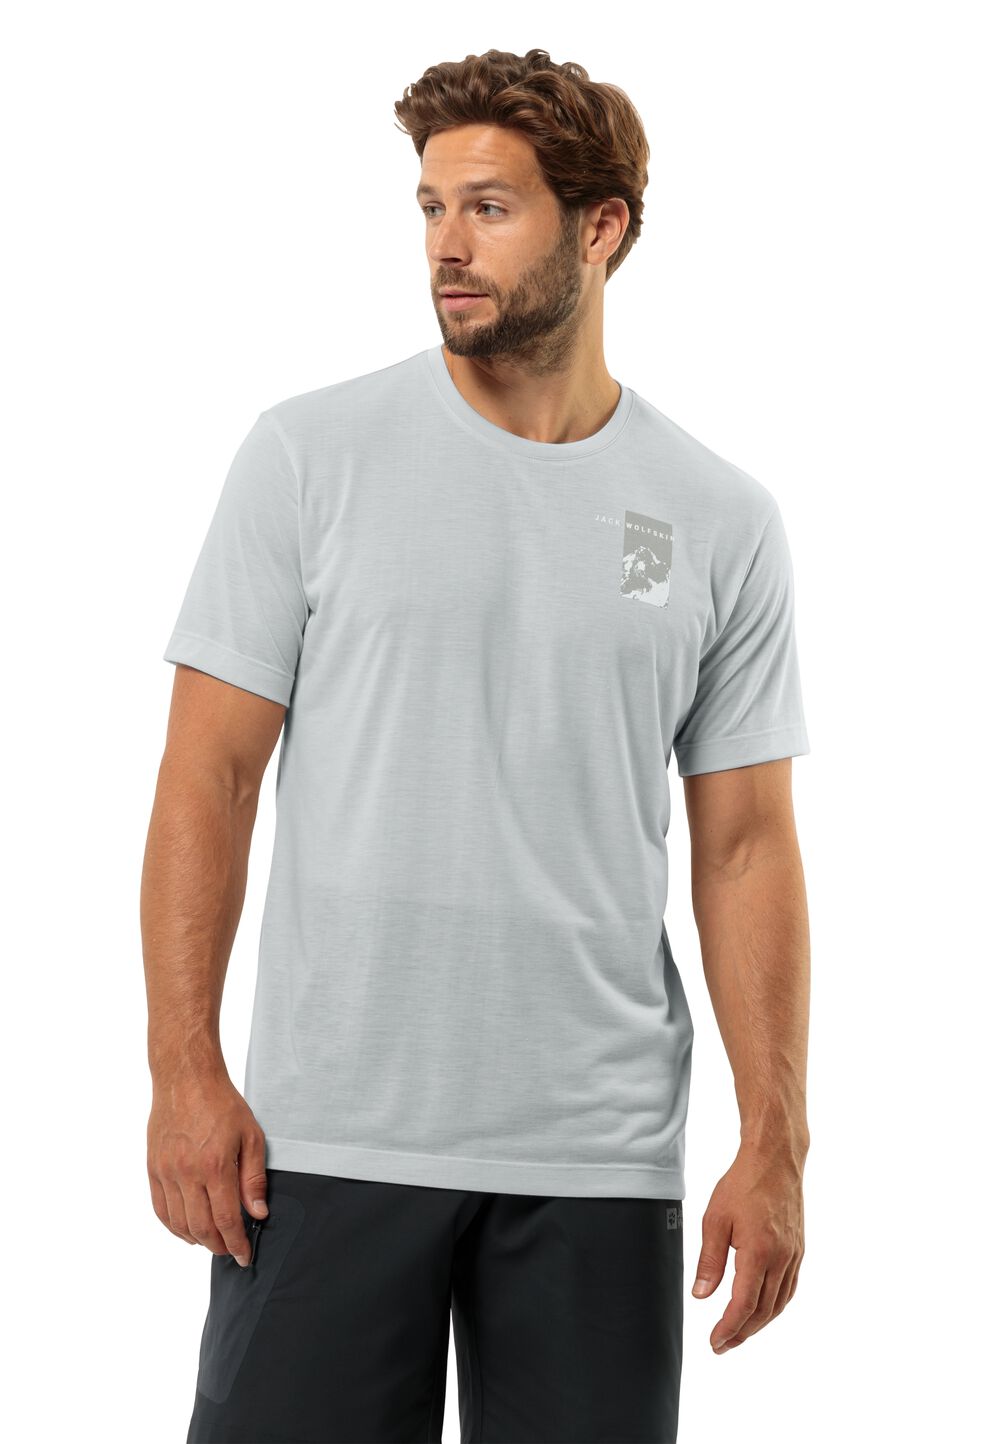 Jack Wolfskin Vonnan S S Graphic T-Shirt Men Functioneel shirt Heren M grijs cool grey